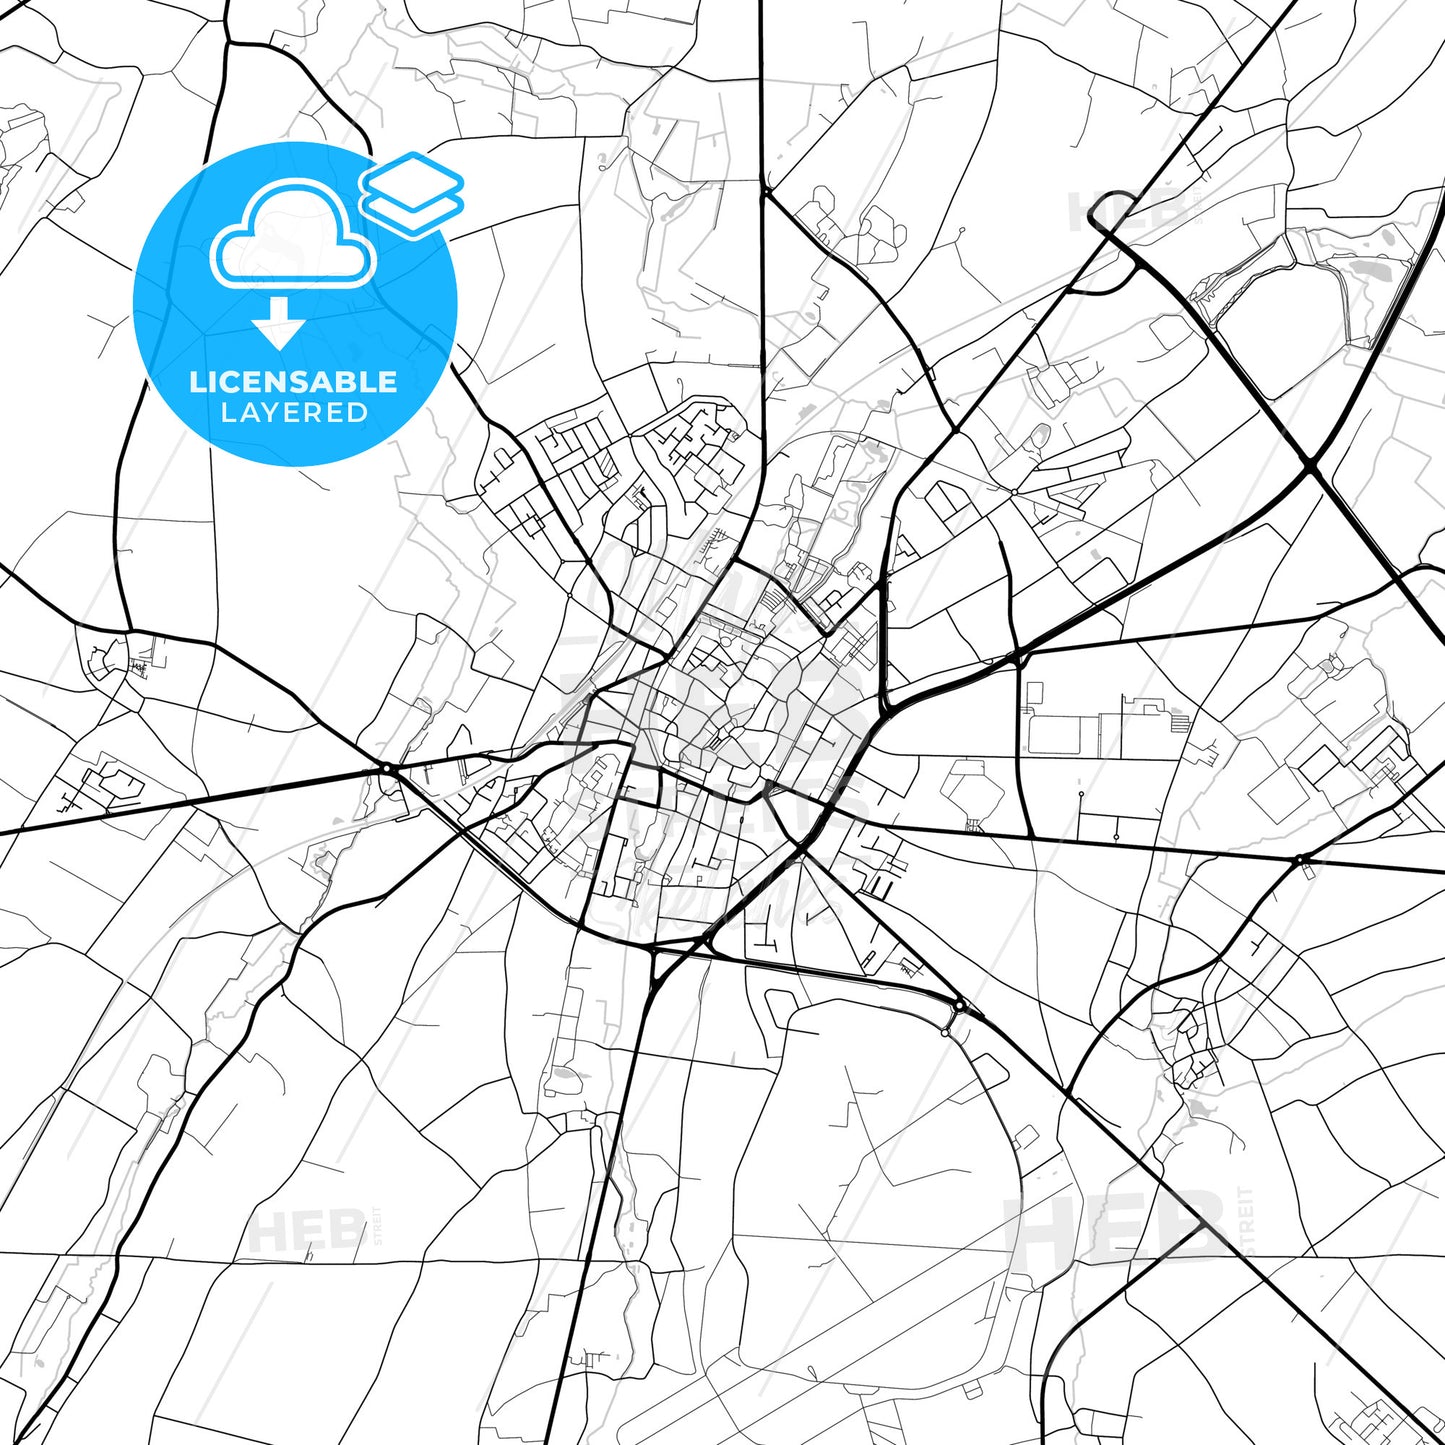 Layered PDF map of Sint-Truiden, Limburg, Belgium